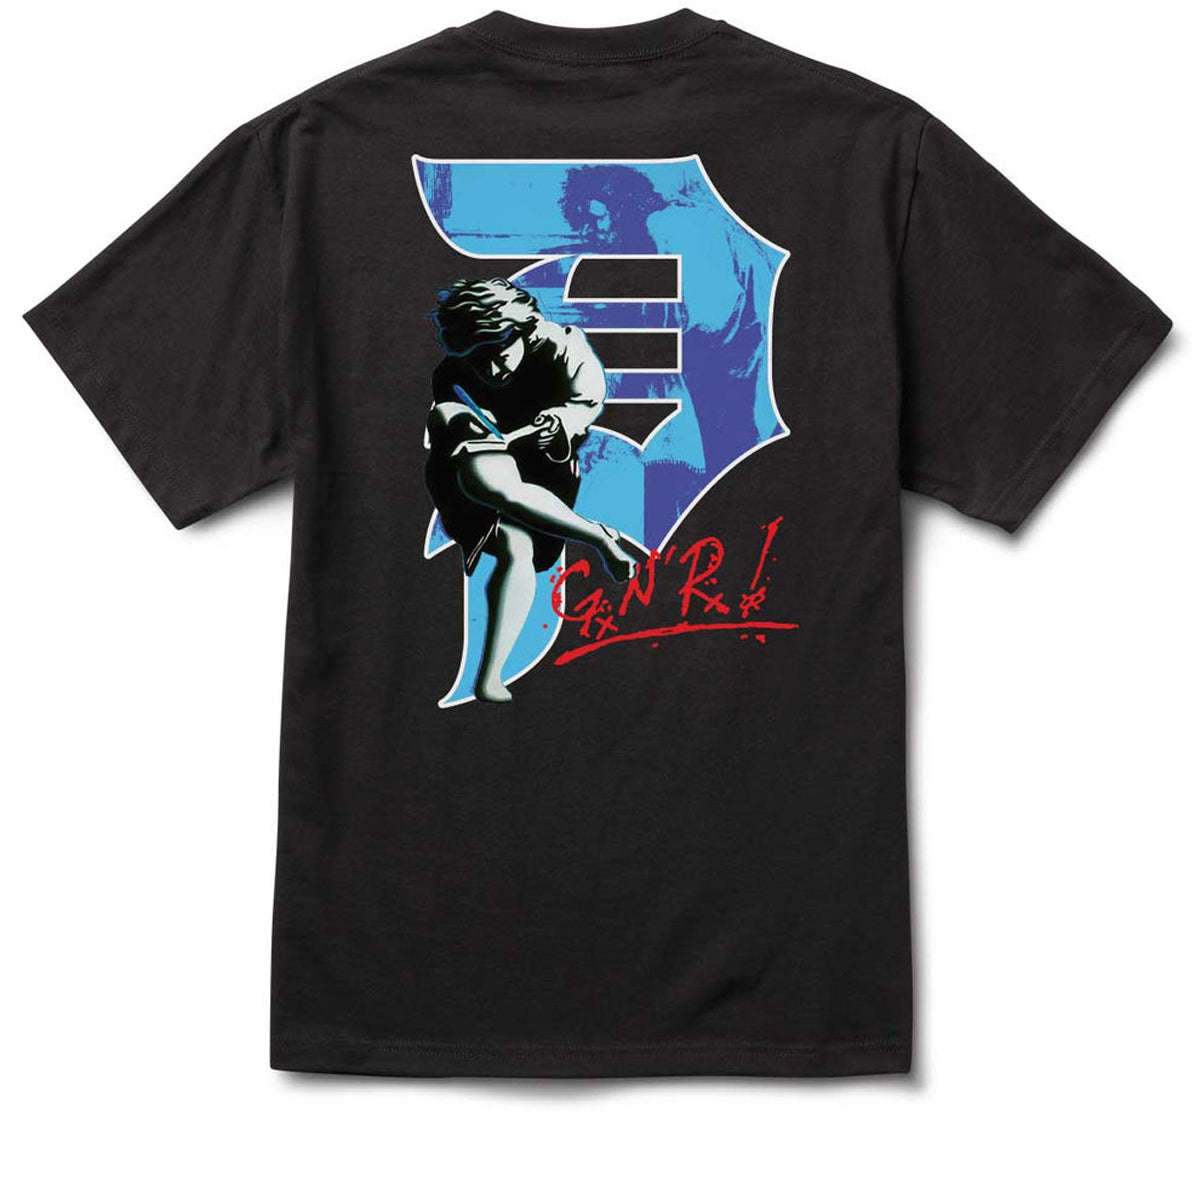 Primitive x Guns N' Roses Illusion Dirty P T-Shirt - Black image 1